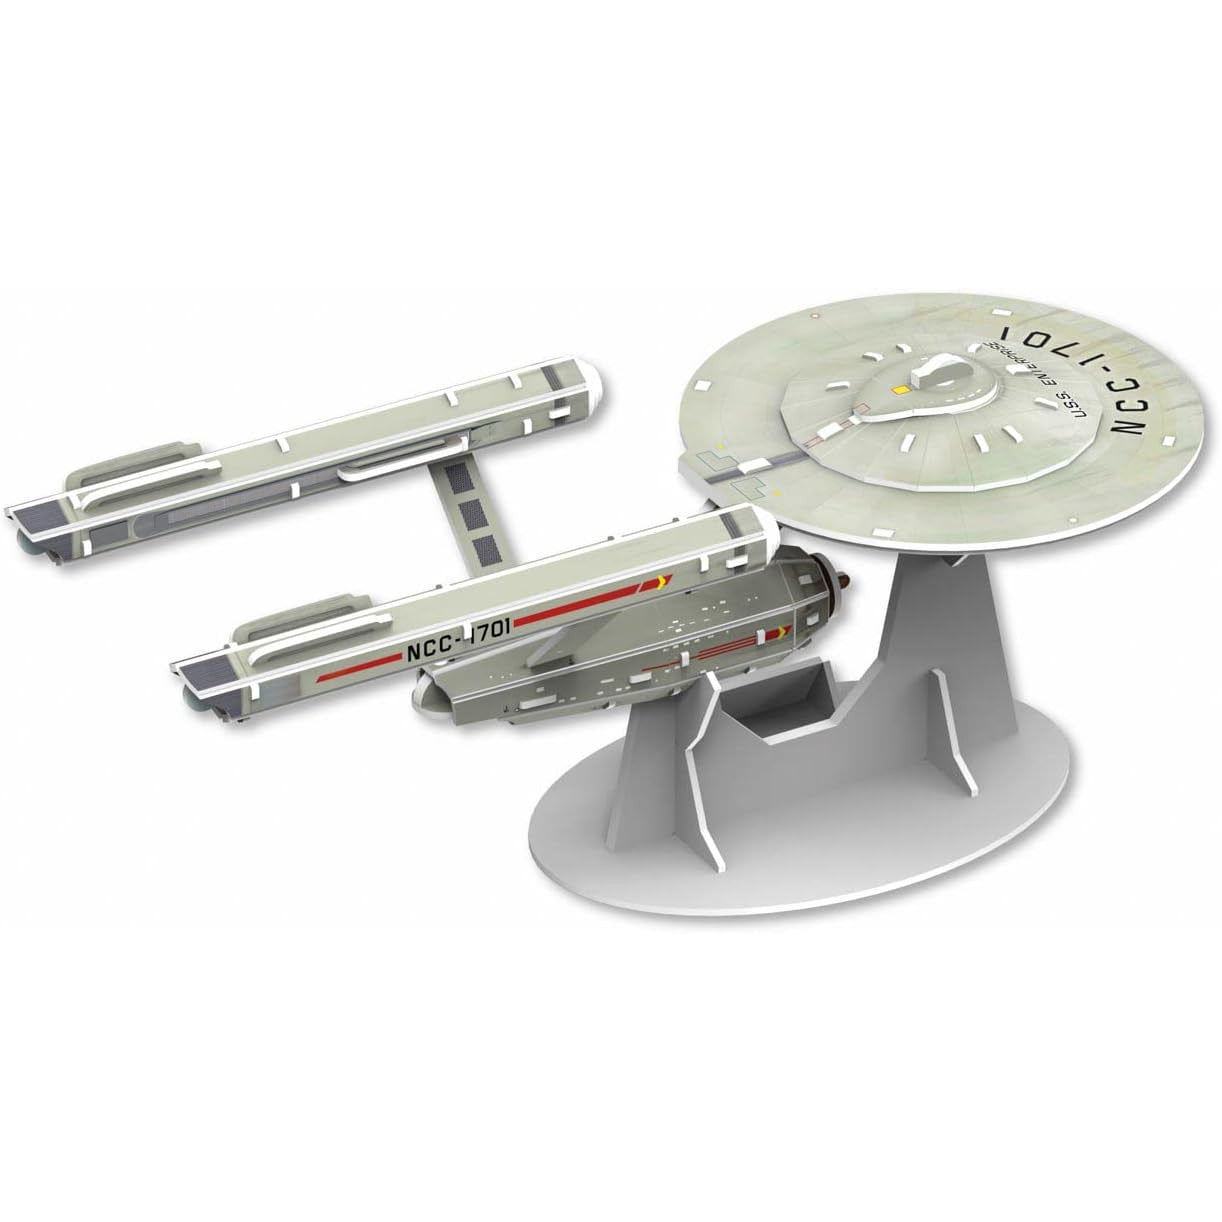 Star Trek The Original Series Qraftworks USS Enterprise NCC-1701 Model Kit